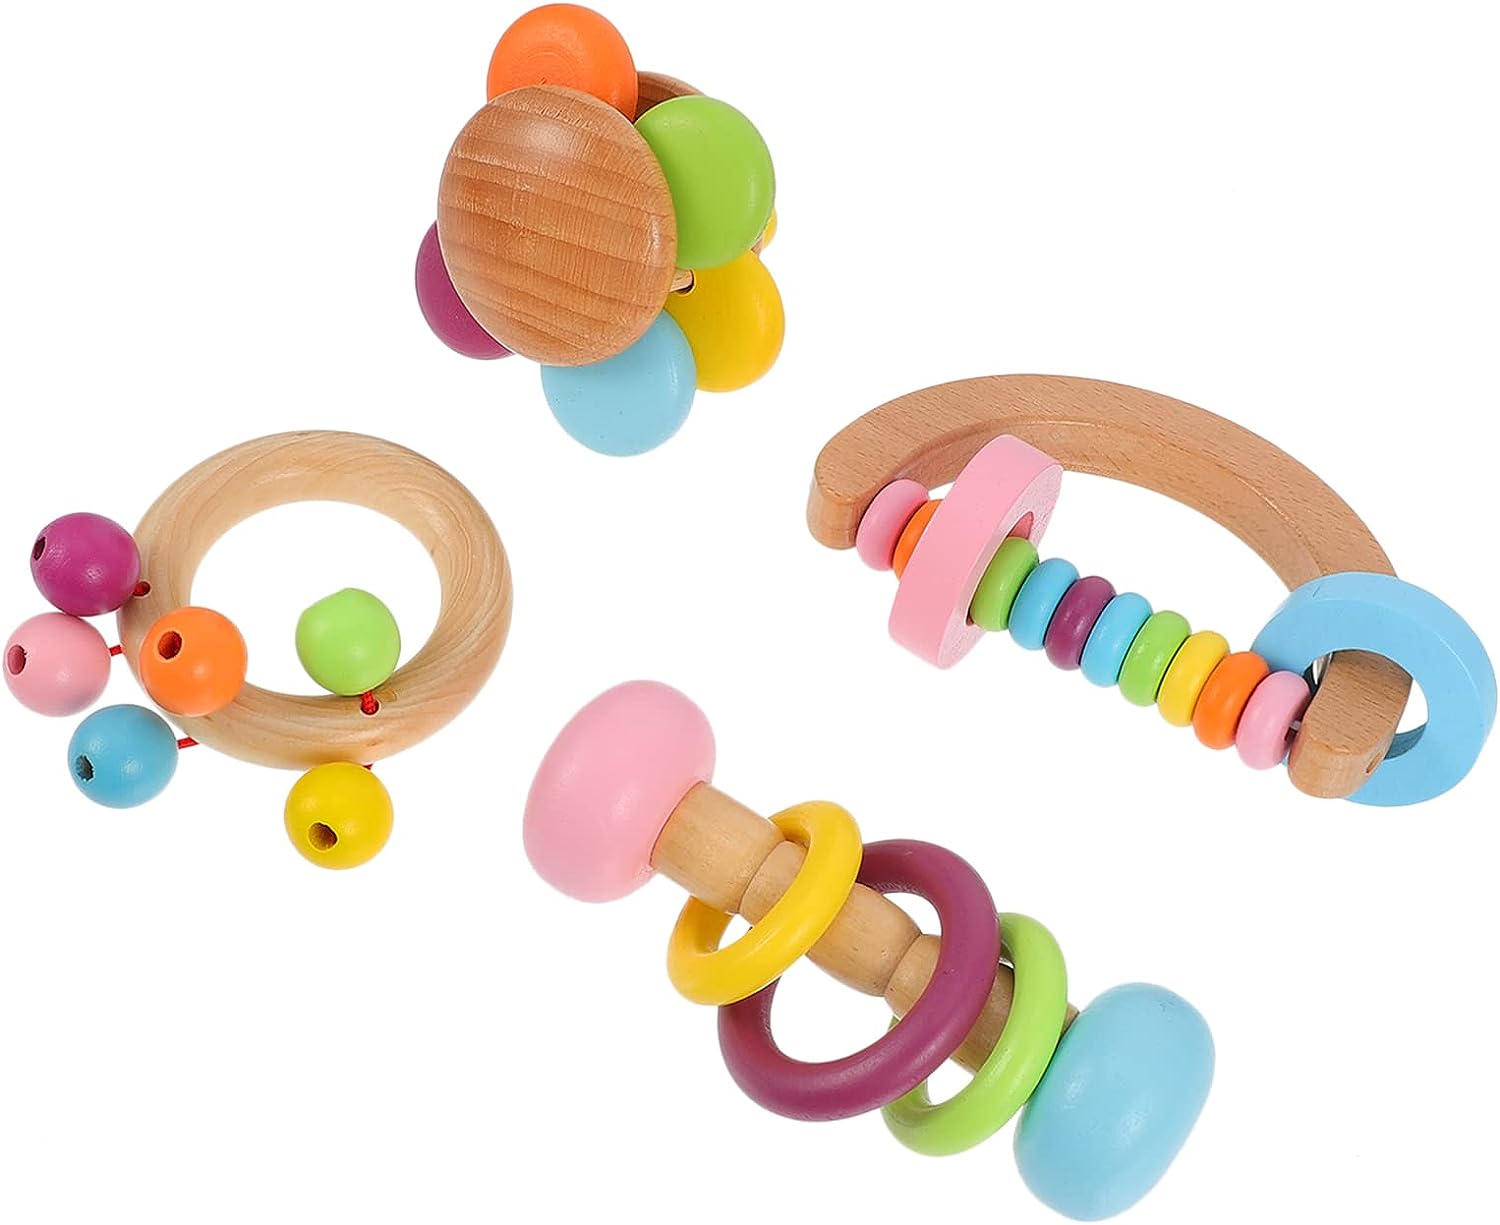 Montessori Wooden Rattles (4 Pack)